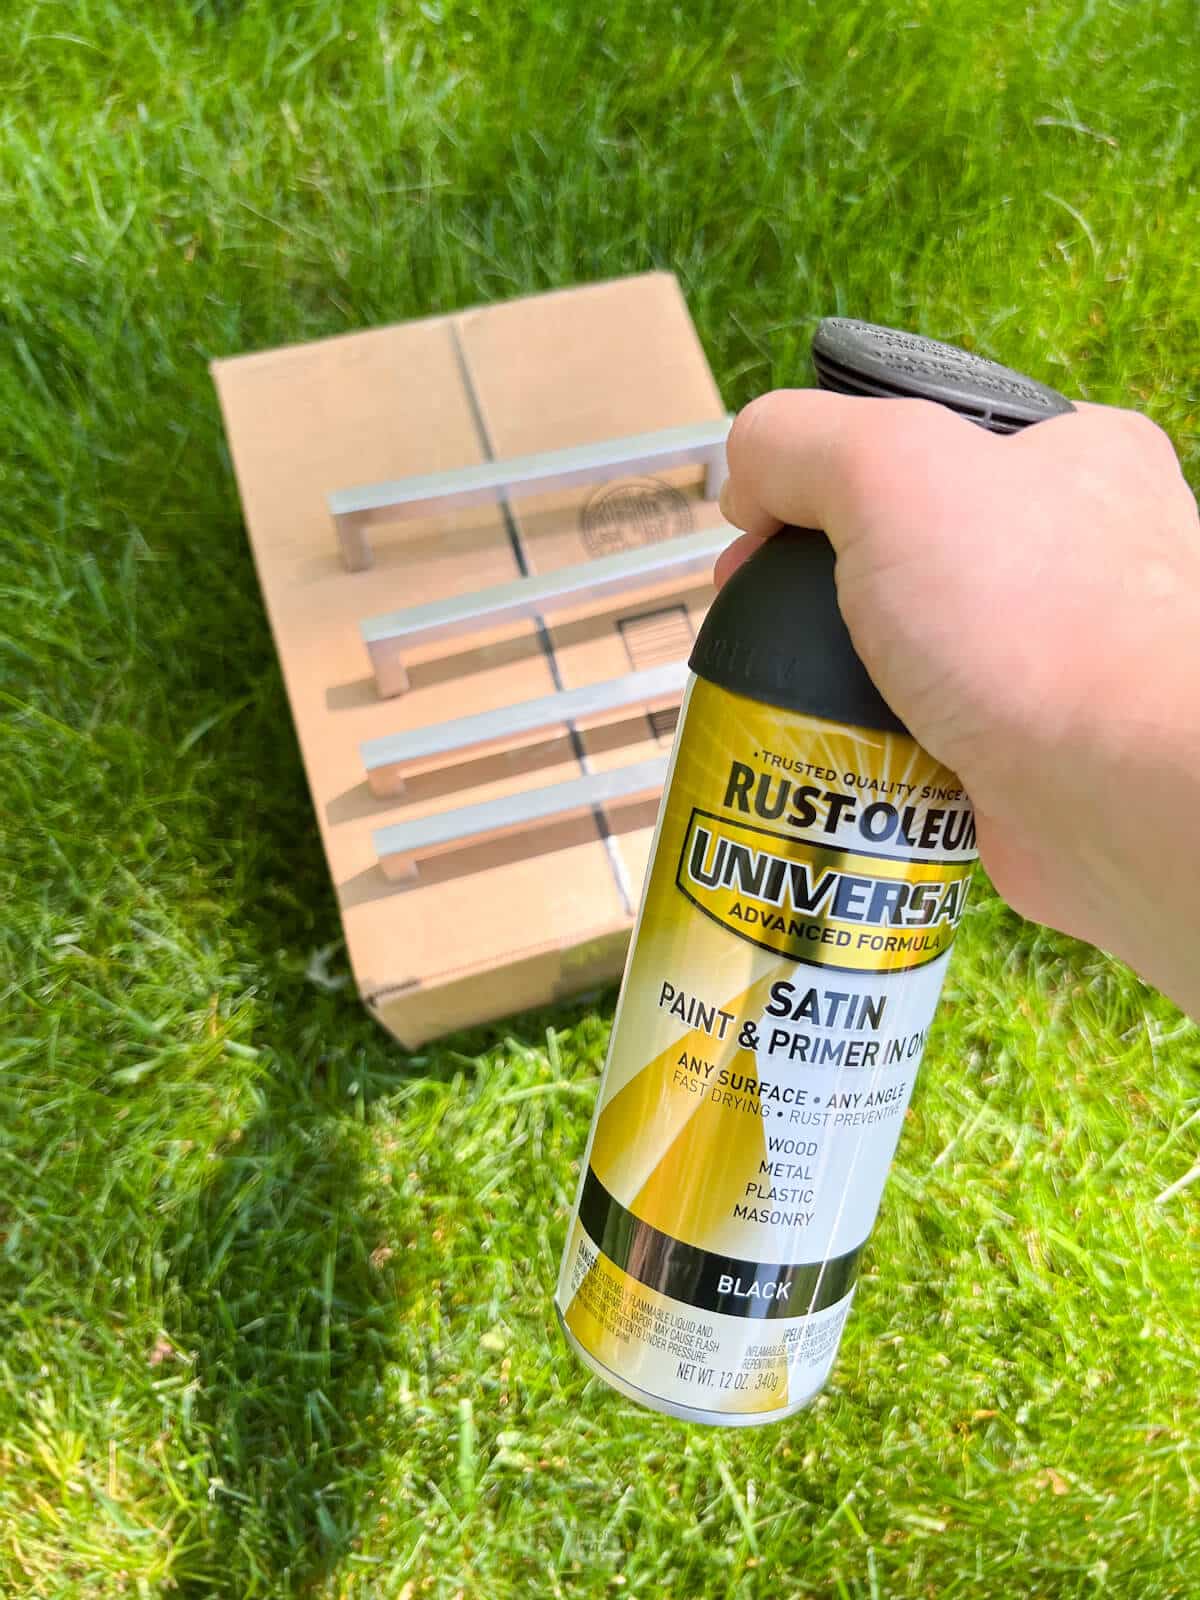 Hand holding black satin Rustoleum spray paint with kitchen hardware on grass.